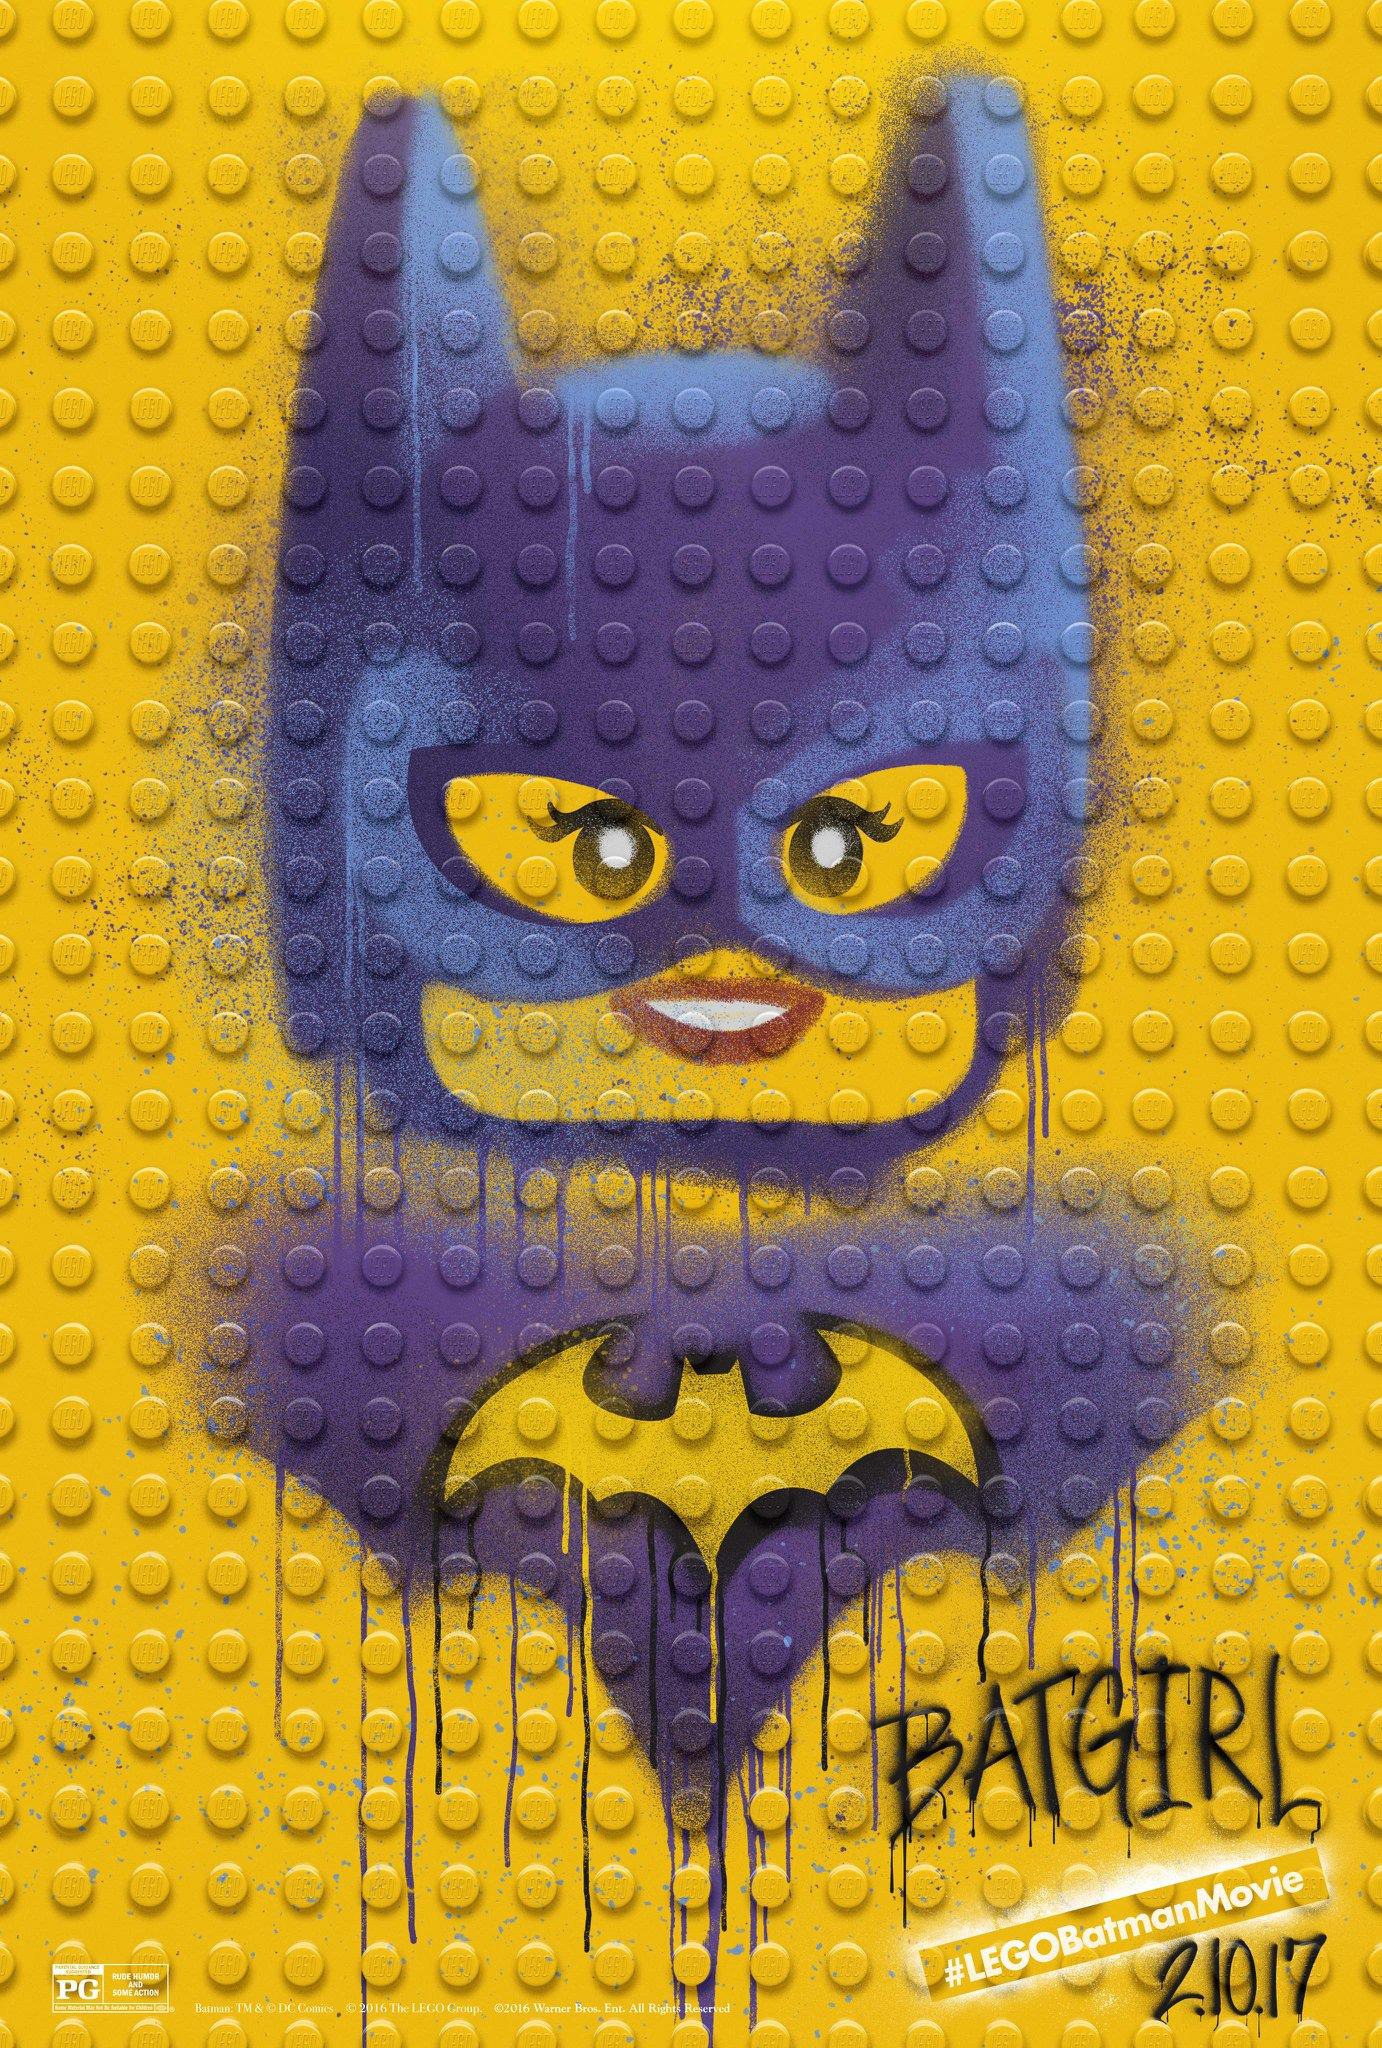 Mega Sized Movie Poster Image for The Lego Batman Movie (#14 of 27)